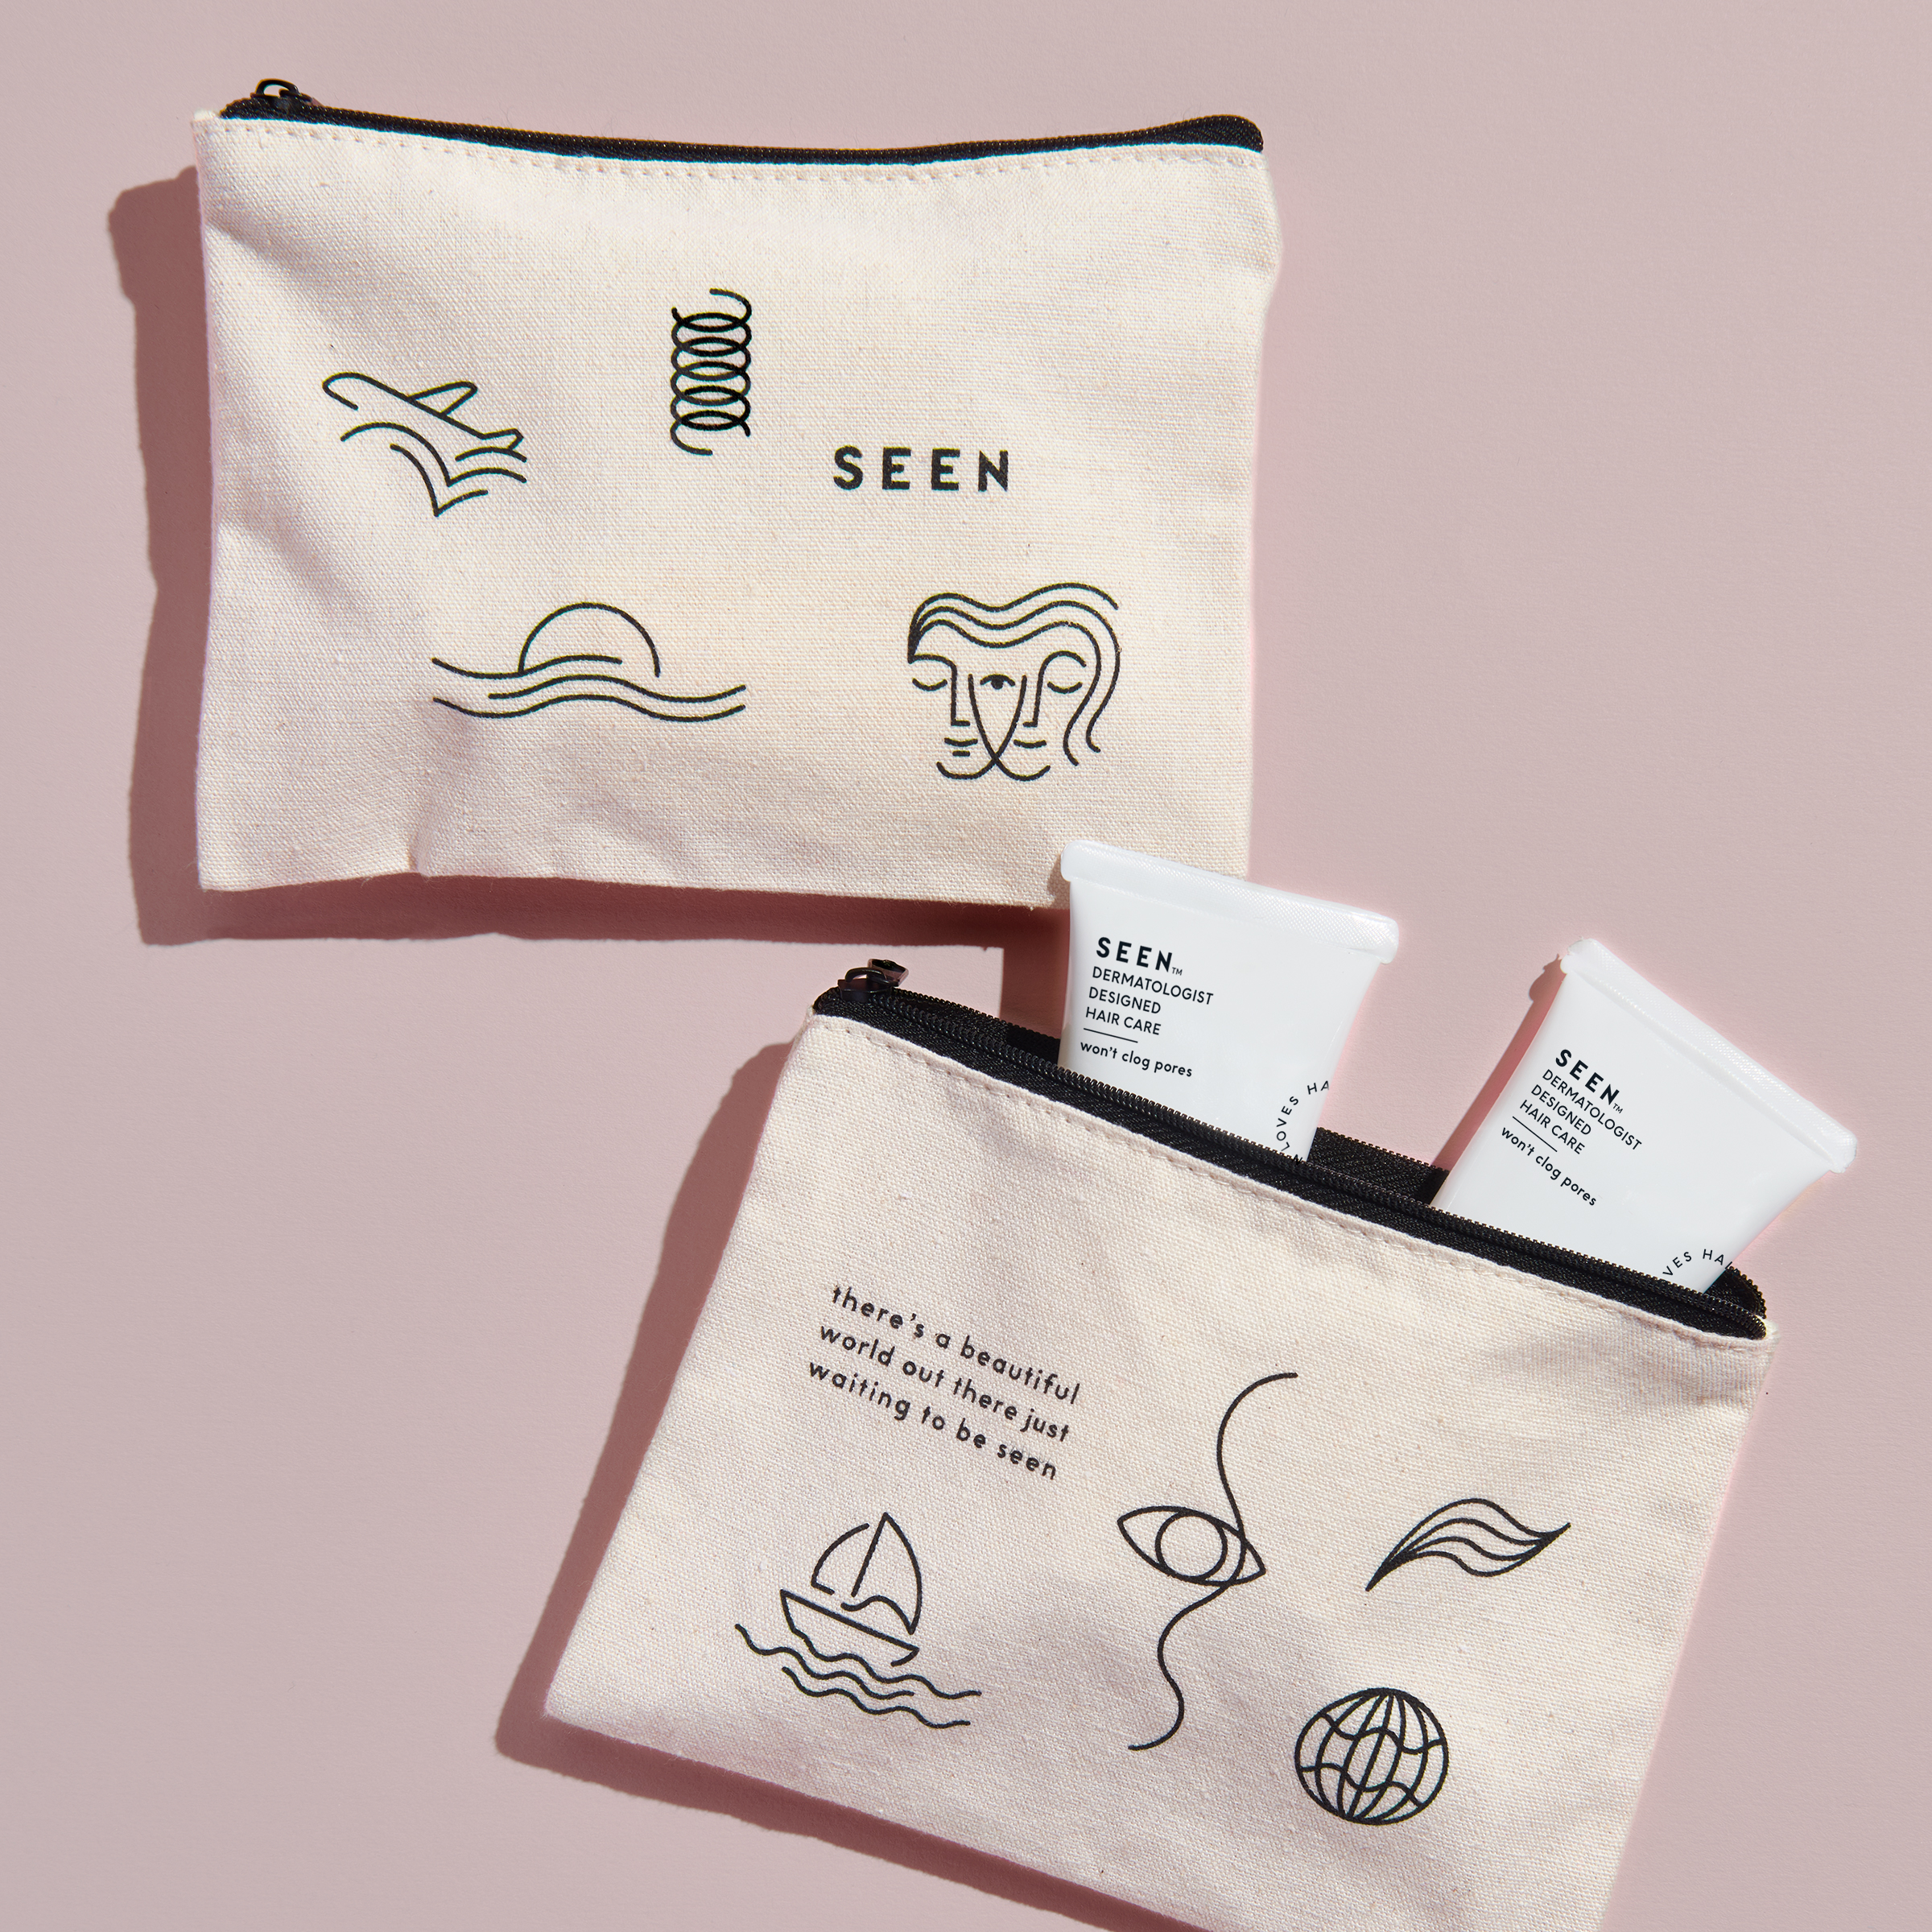 SEEN travel size pouch designed by Werner Design Werks